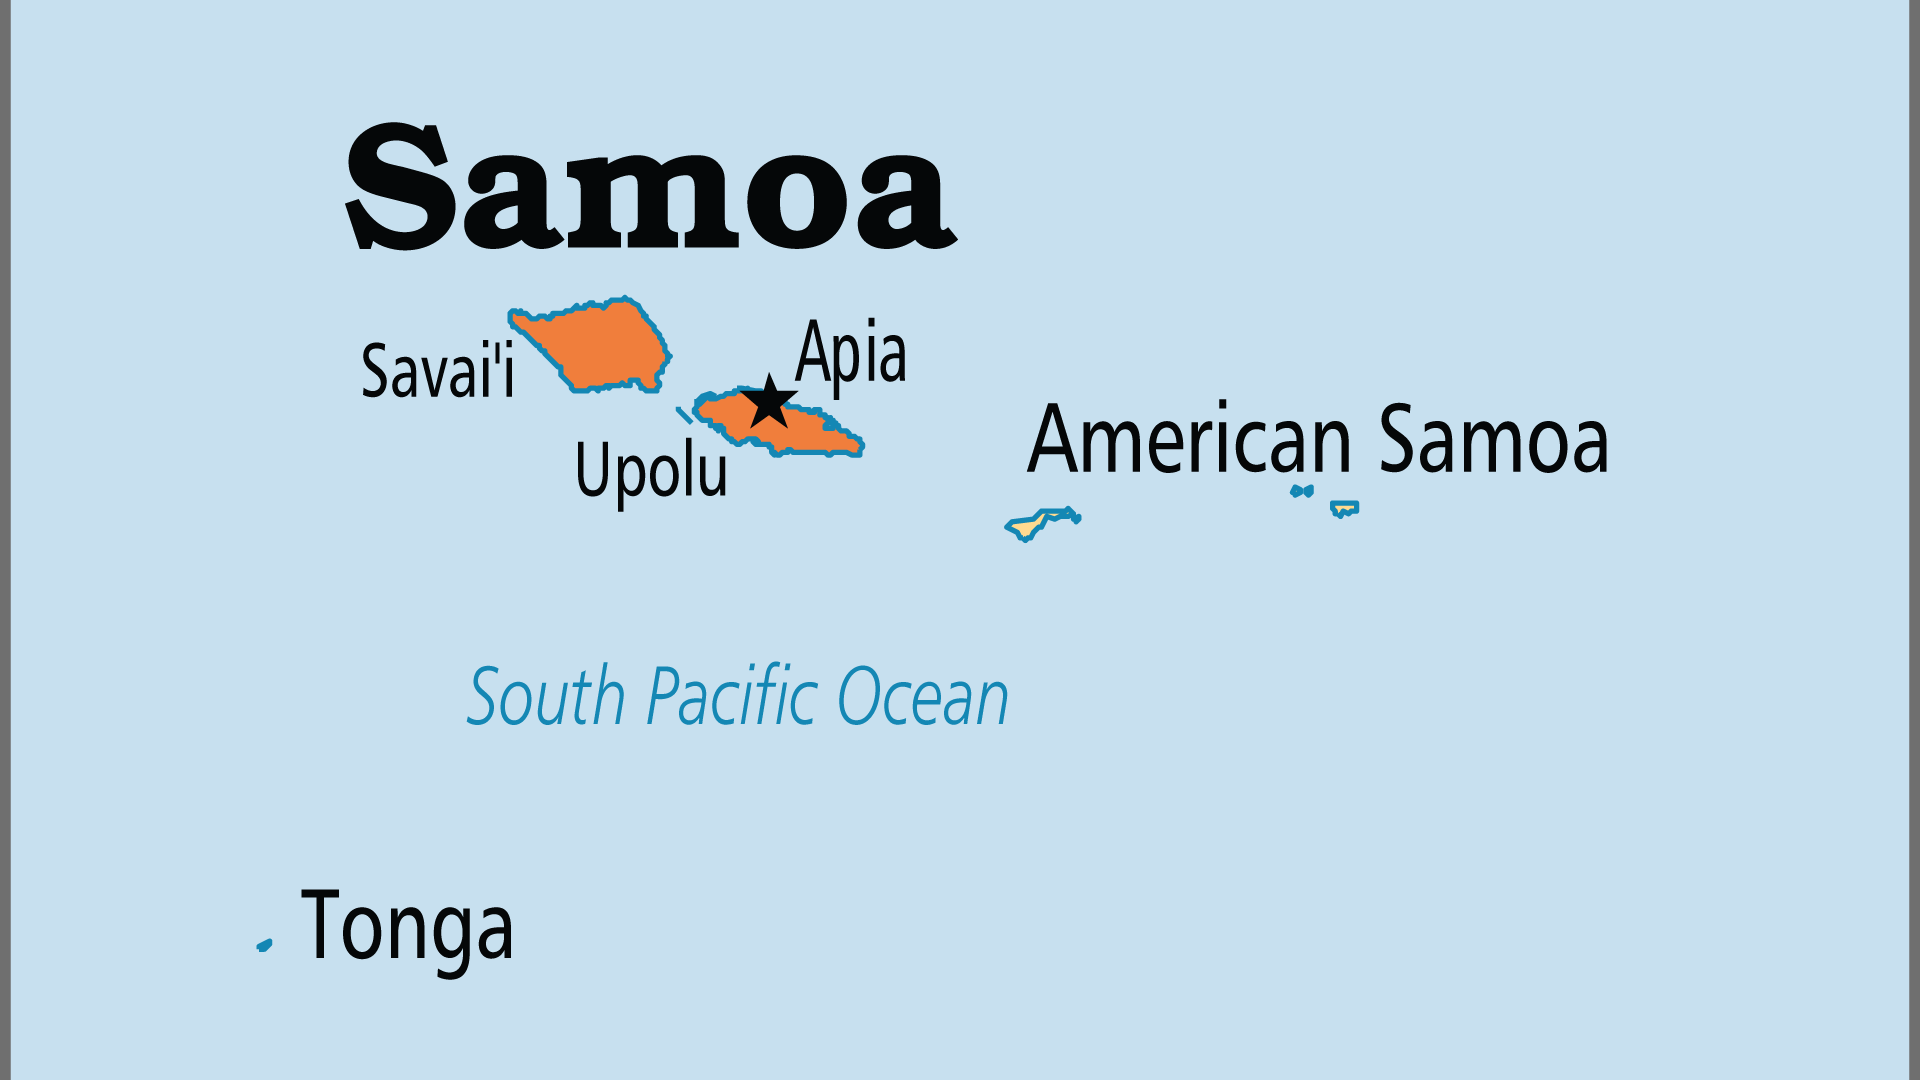 Samoa (Operation World)